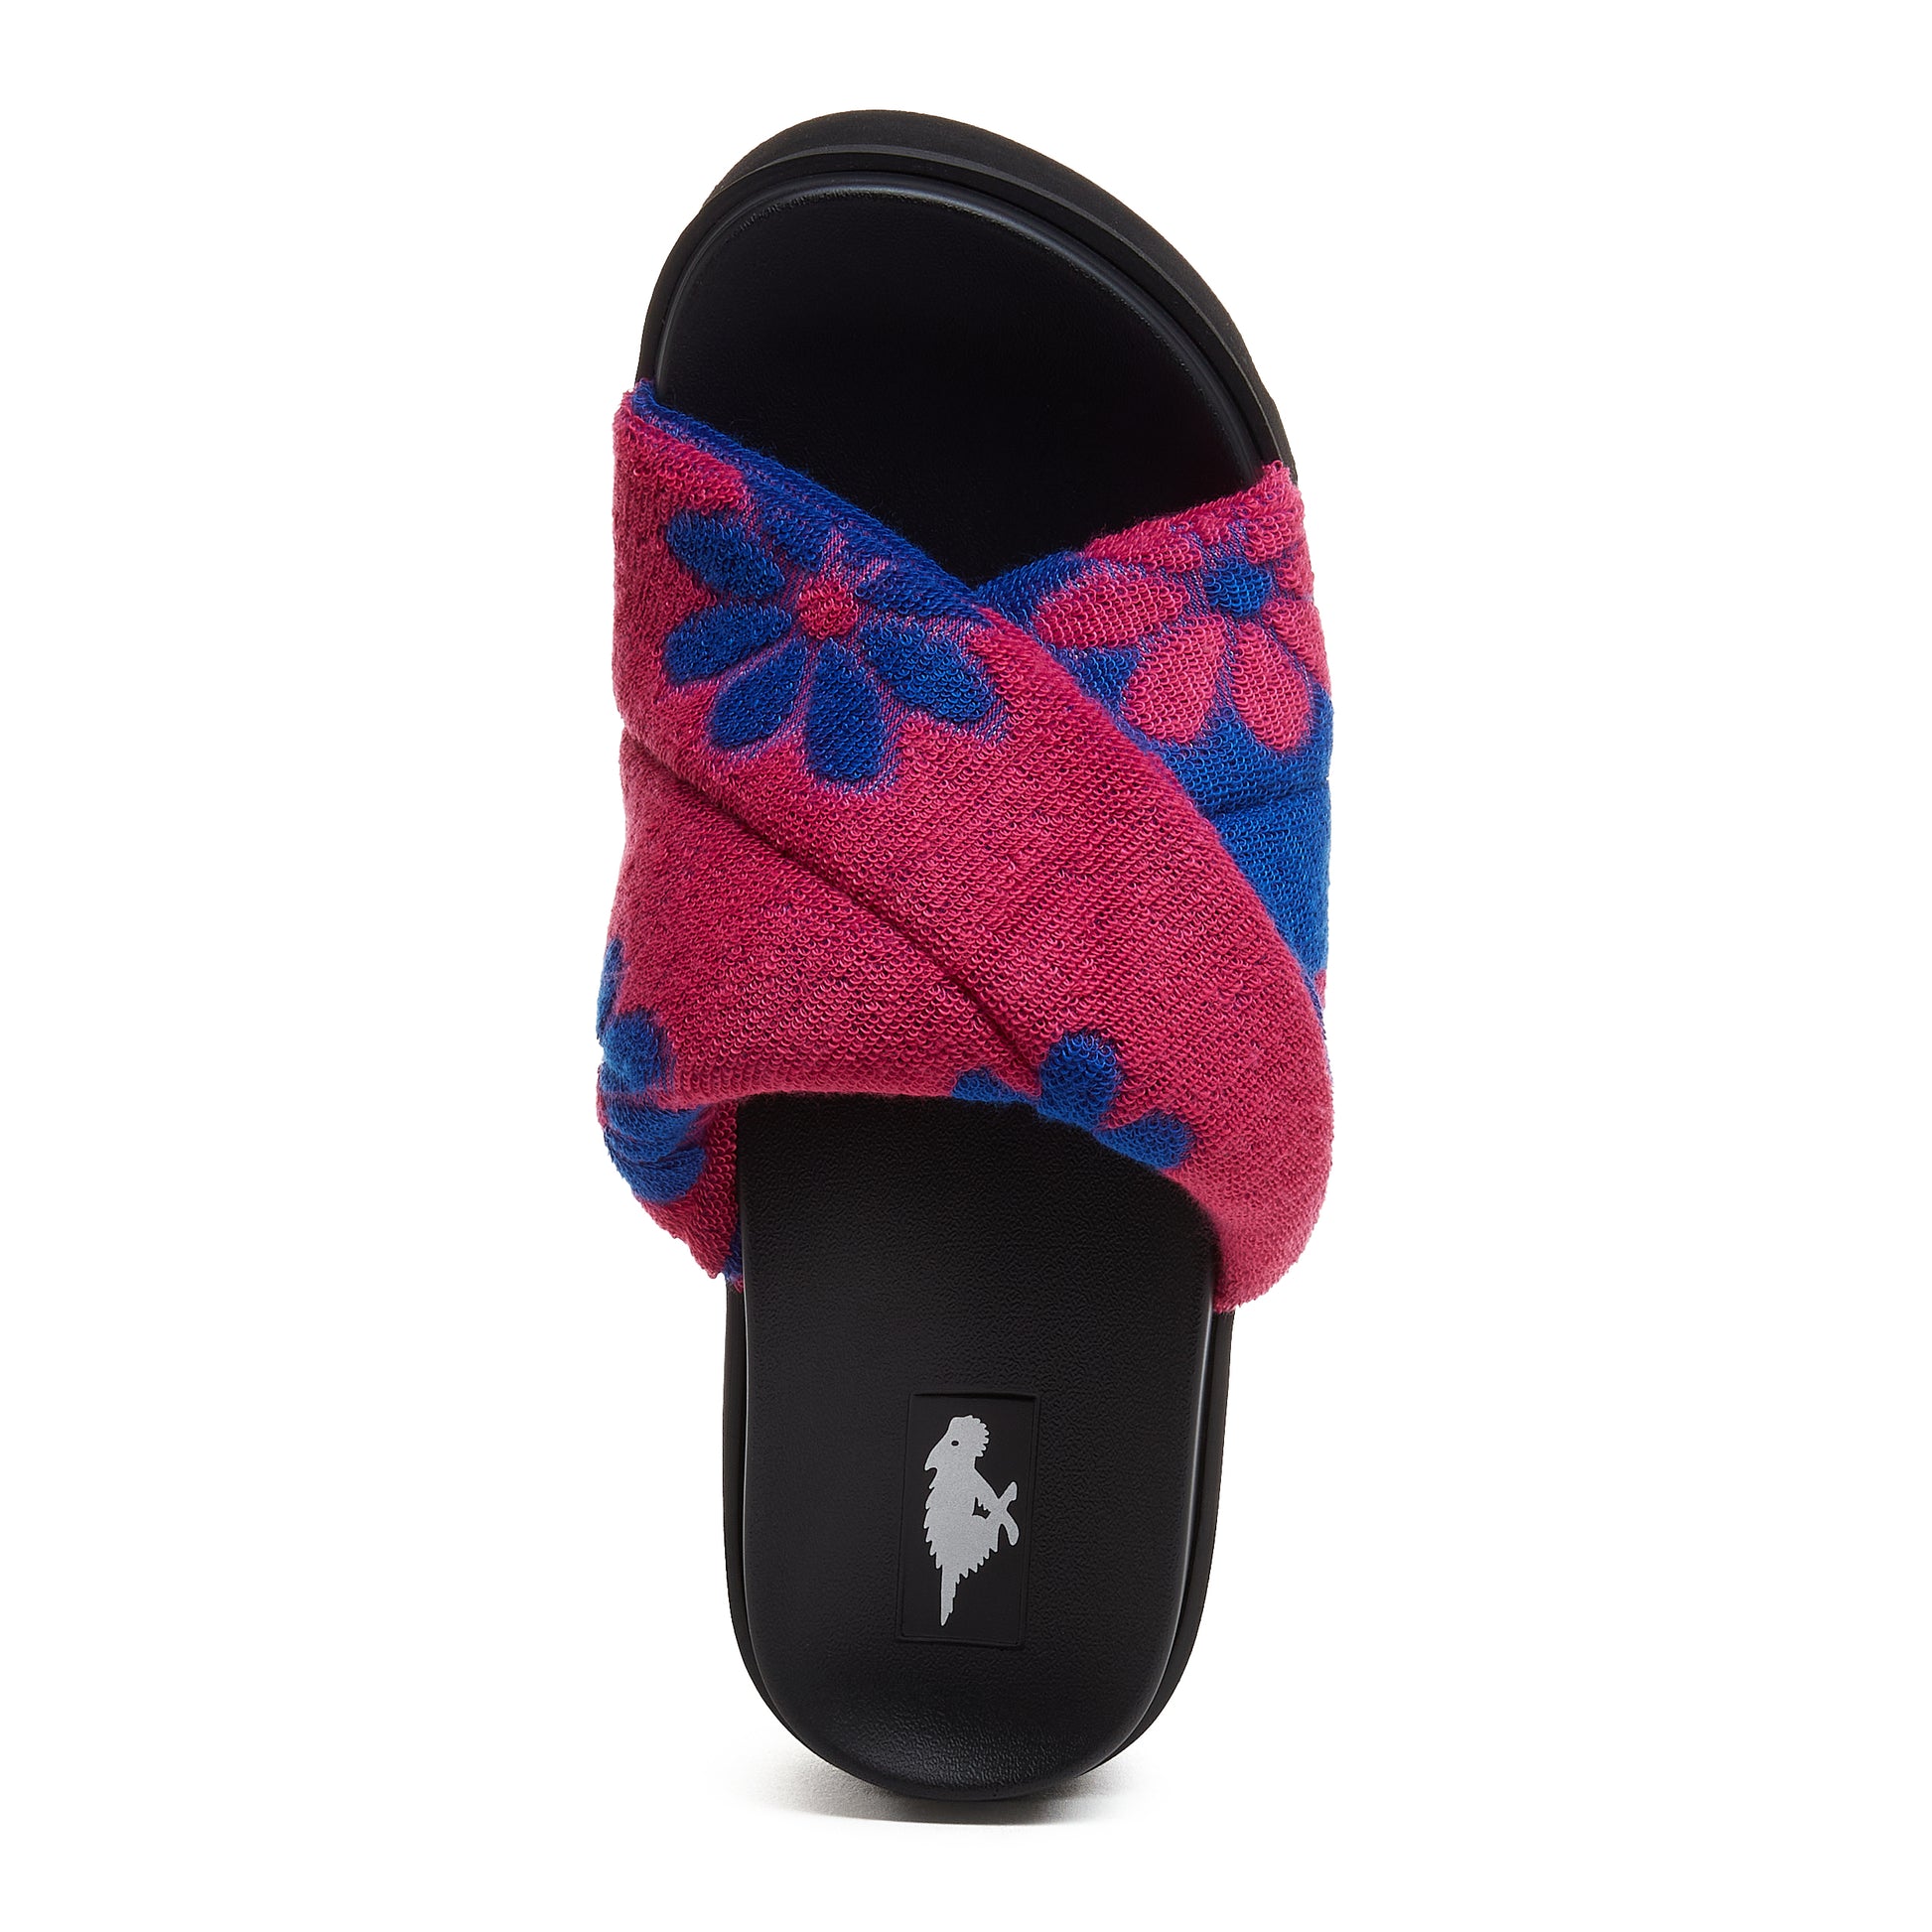 Rocket Dog Breeze Slide Sandals: Hot Pink Terrycloth Poolside Perfection